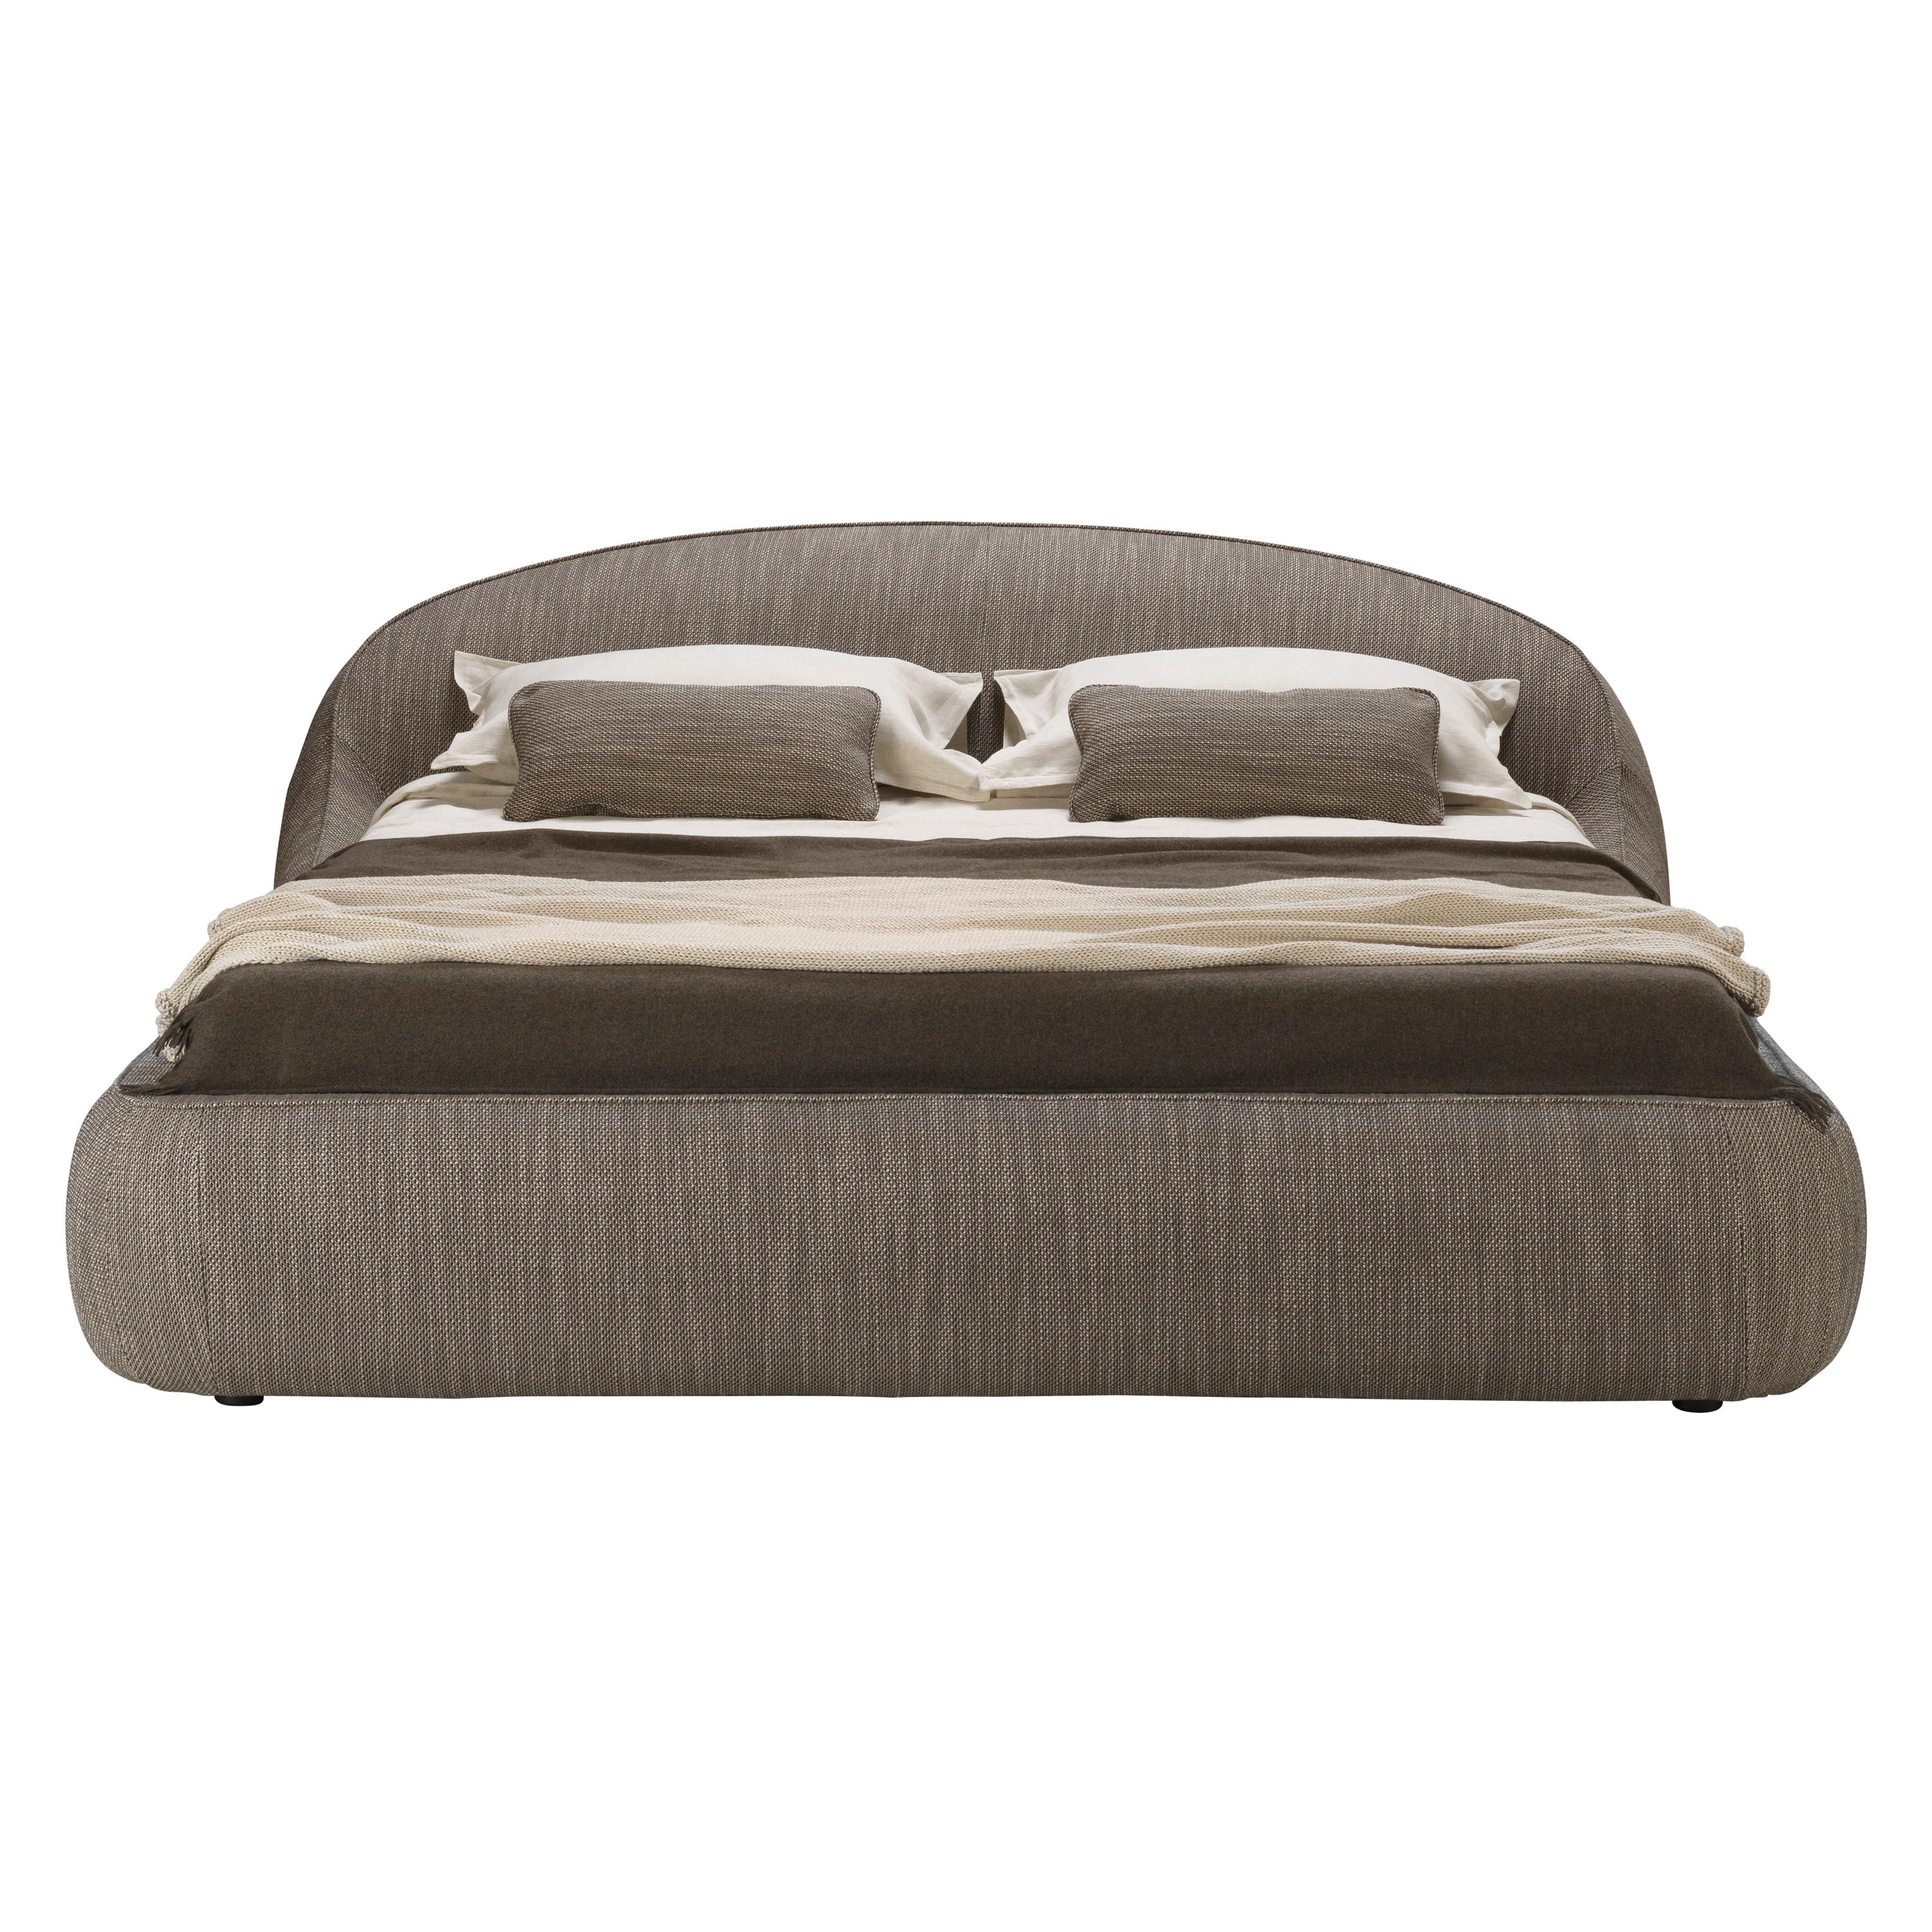 Abbracci-Bett, Bett aus Bogardine-Stoff, Farbe Taupe, hergestellt in Italien